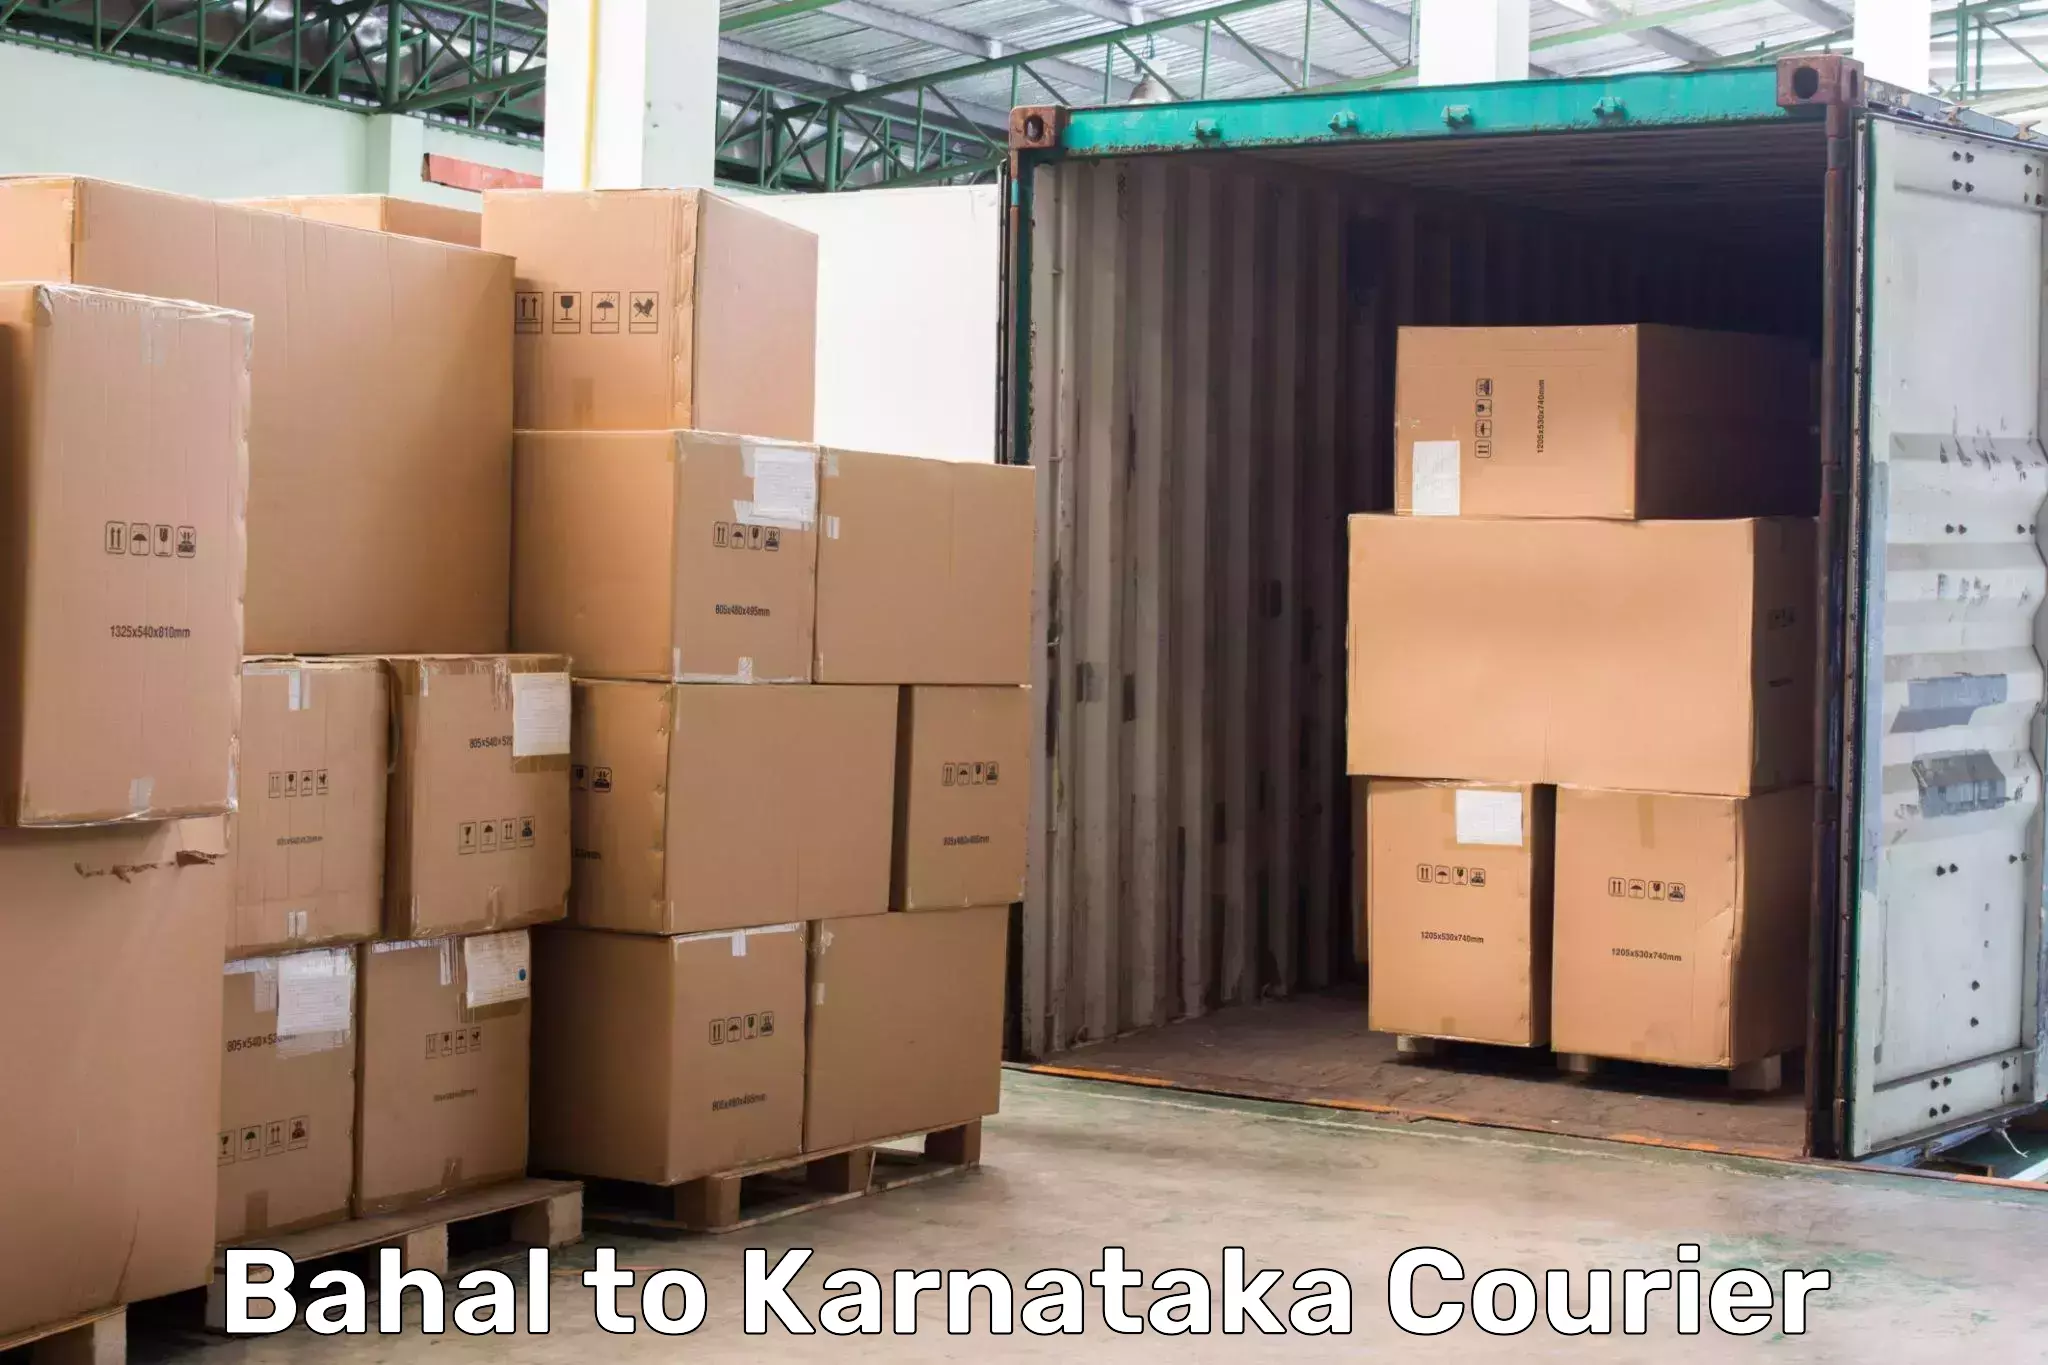 24-hour courier service Bahal to Nelamangala